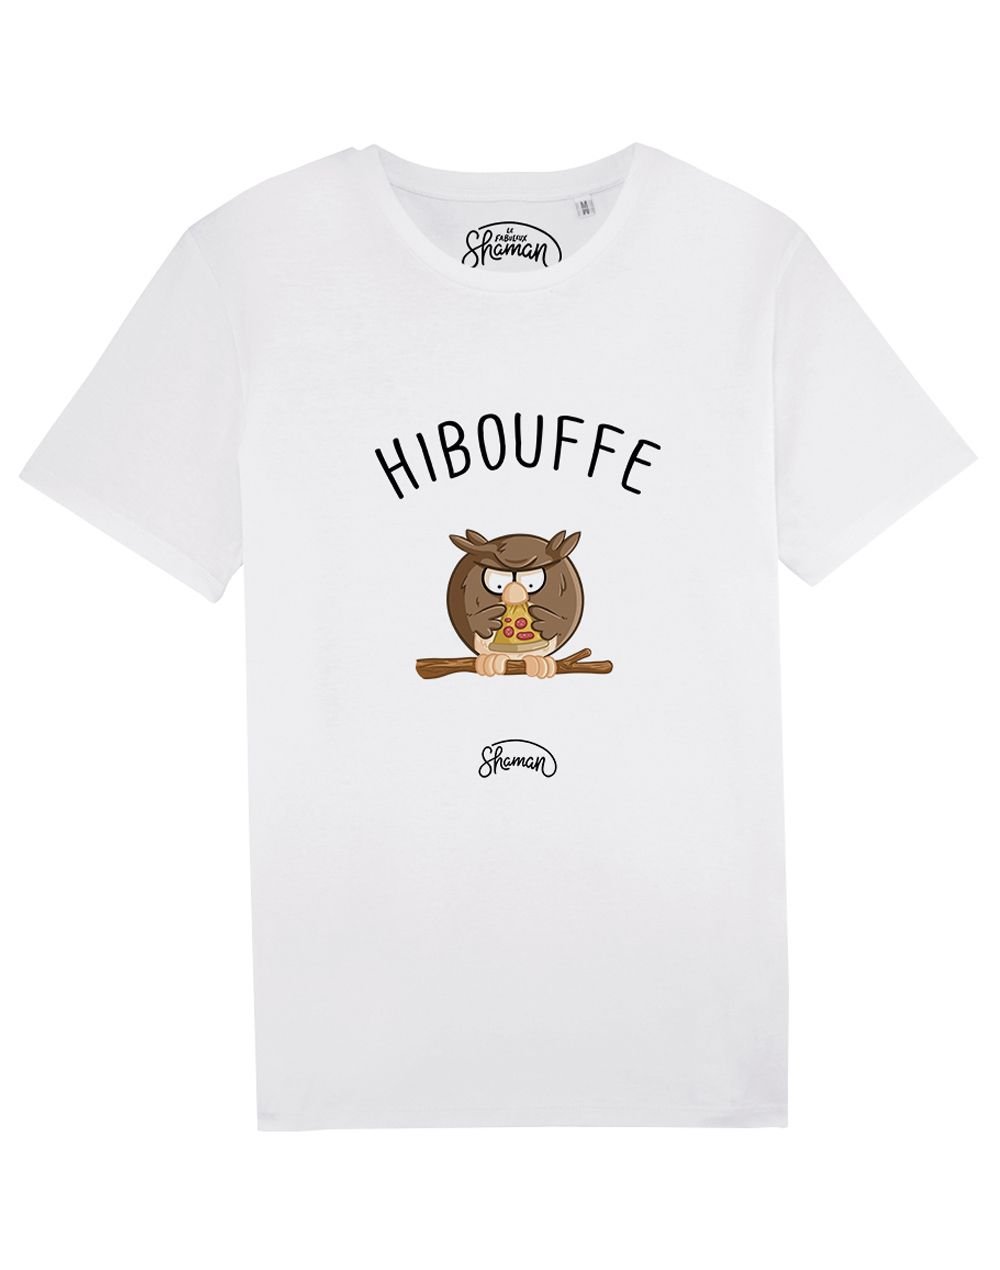 Tee shirt "Hibouffe"